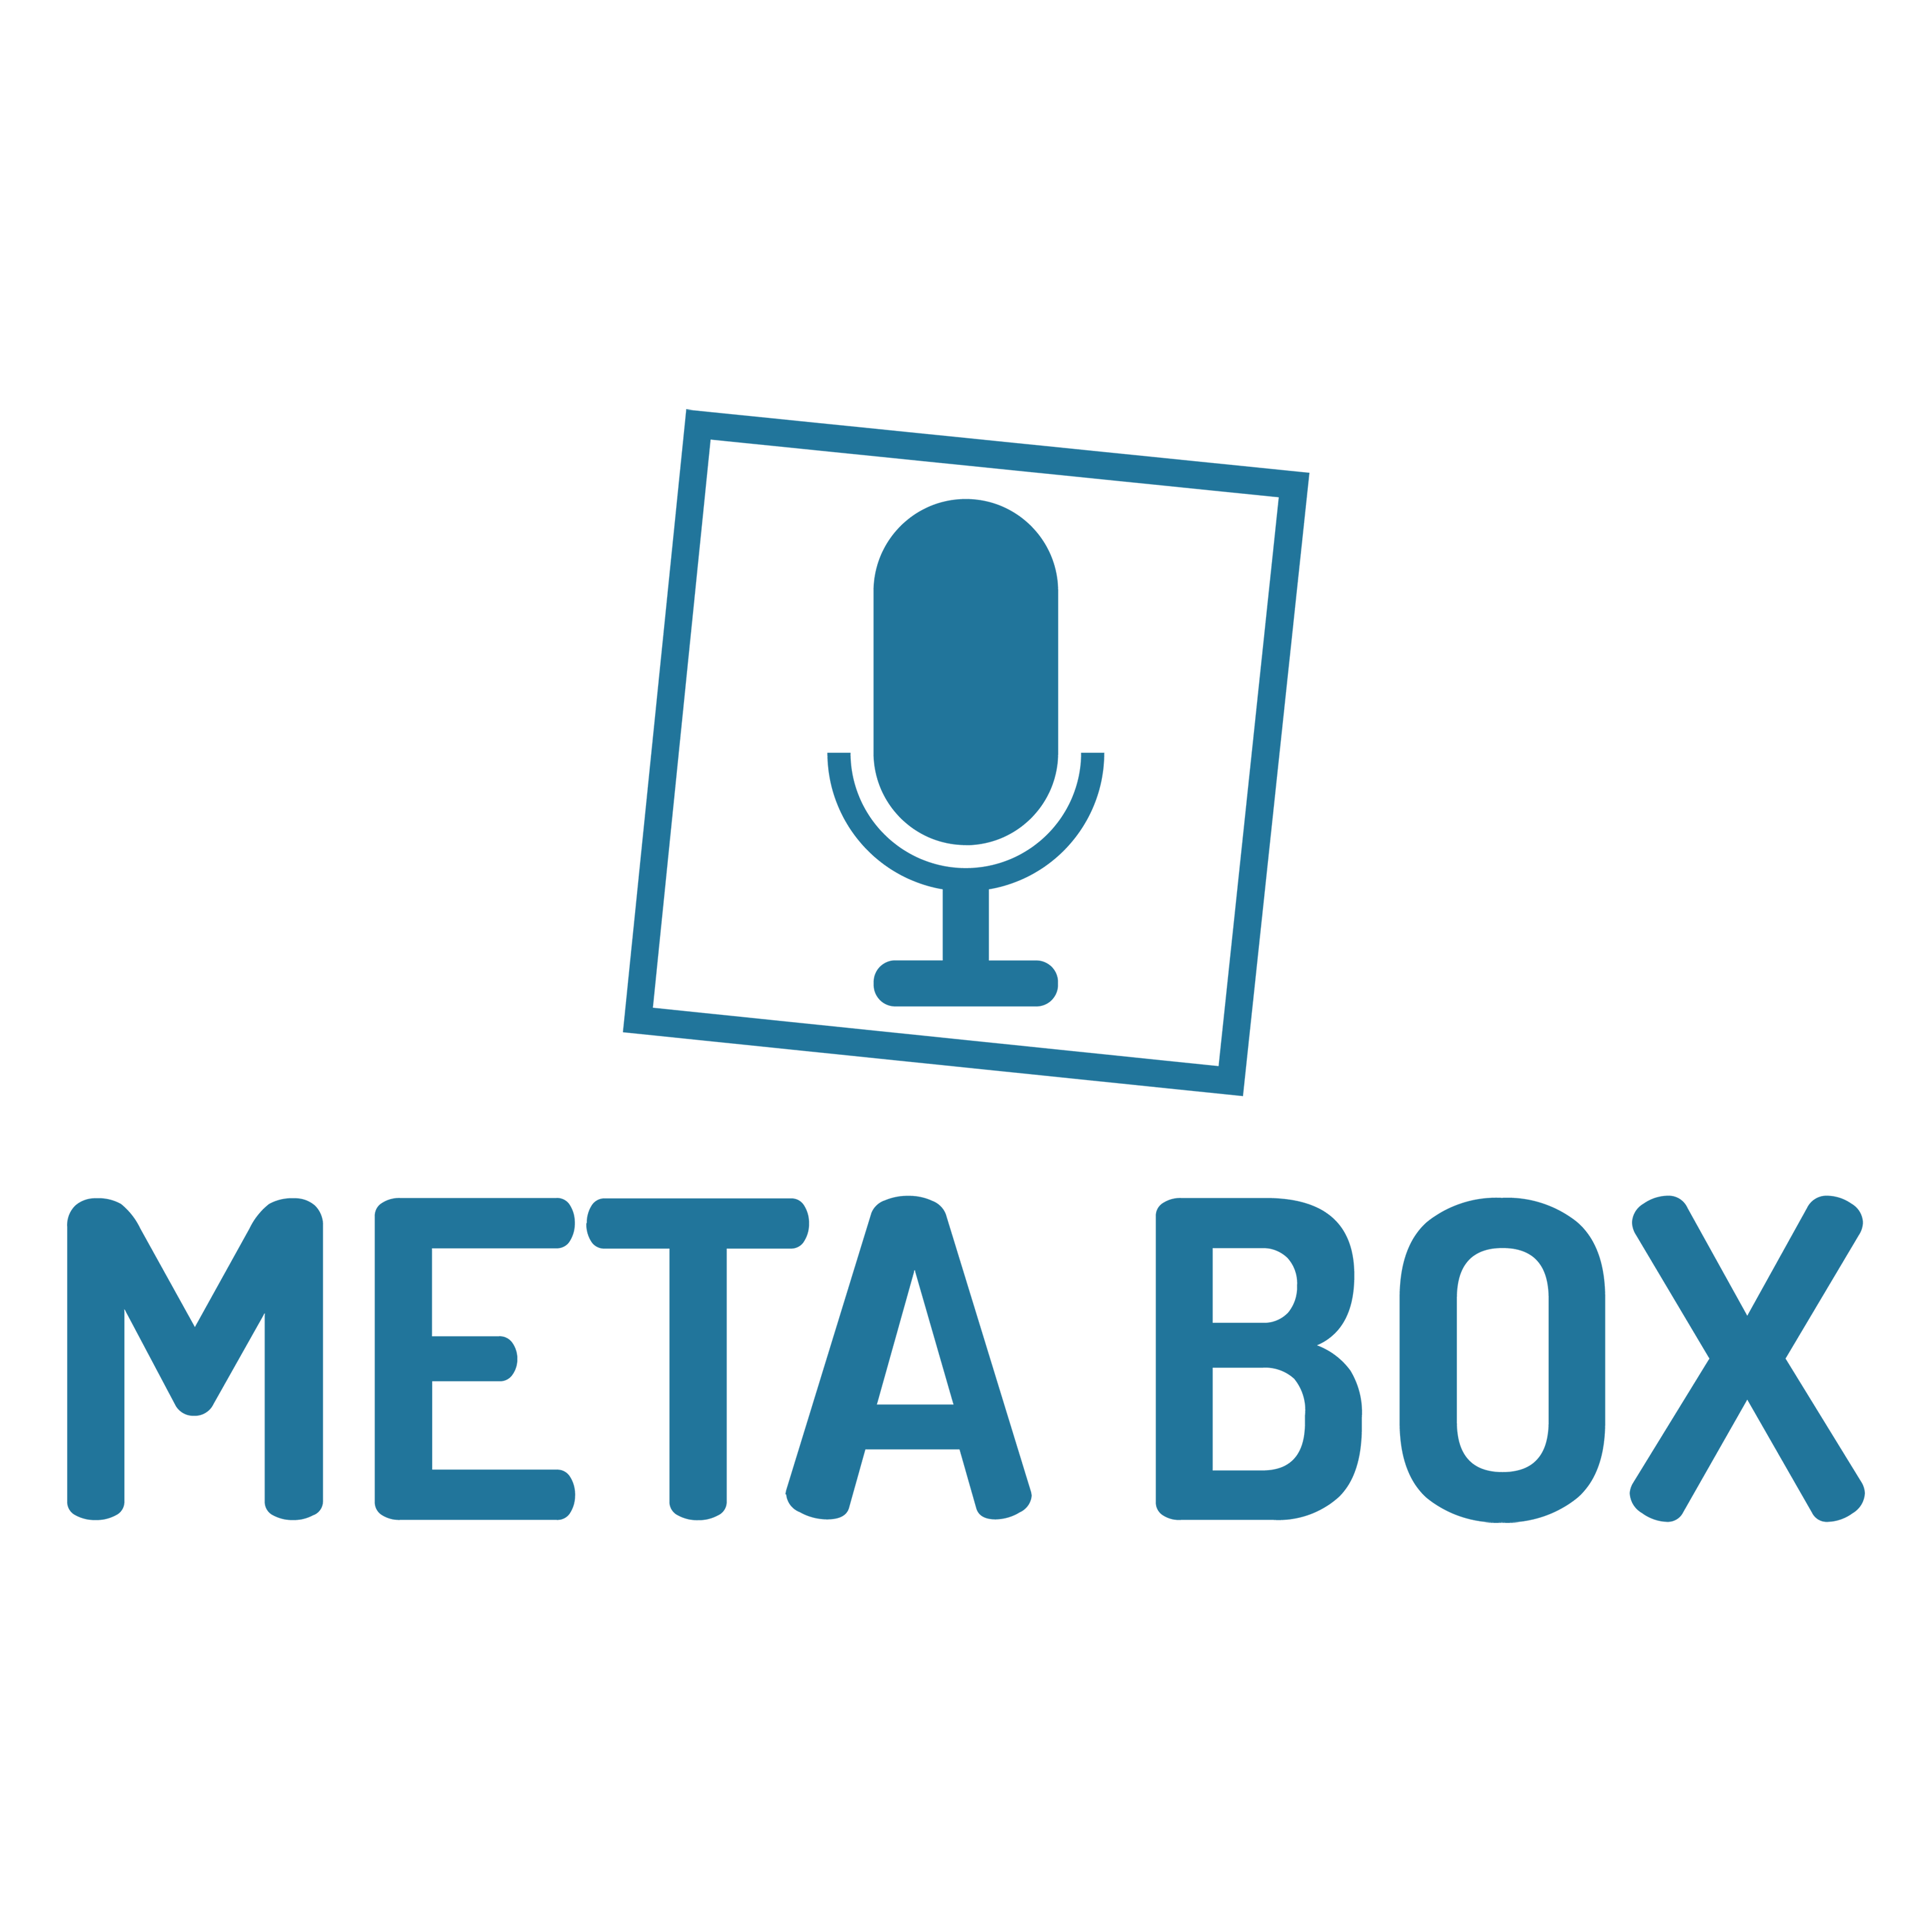 Meta Box